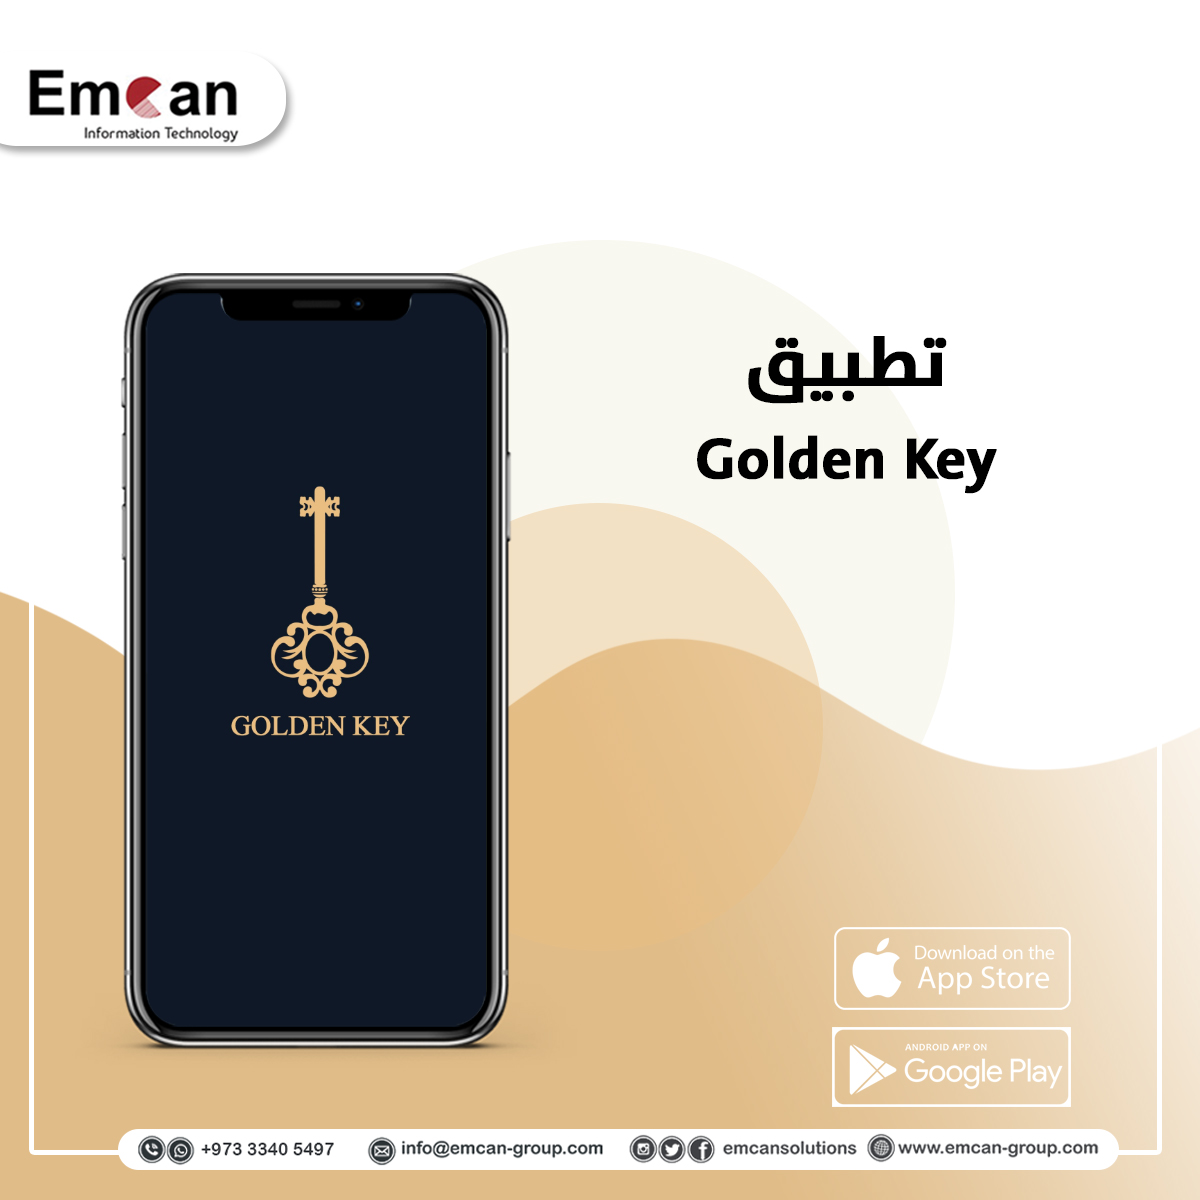 Golden Key application